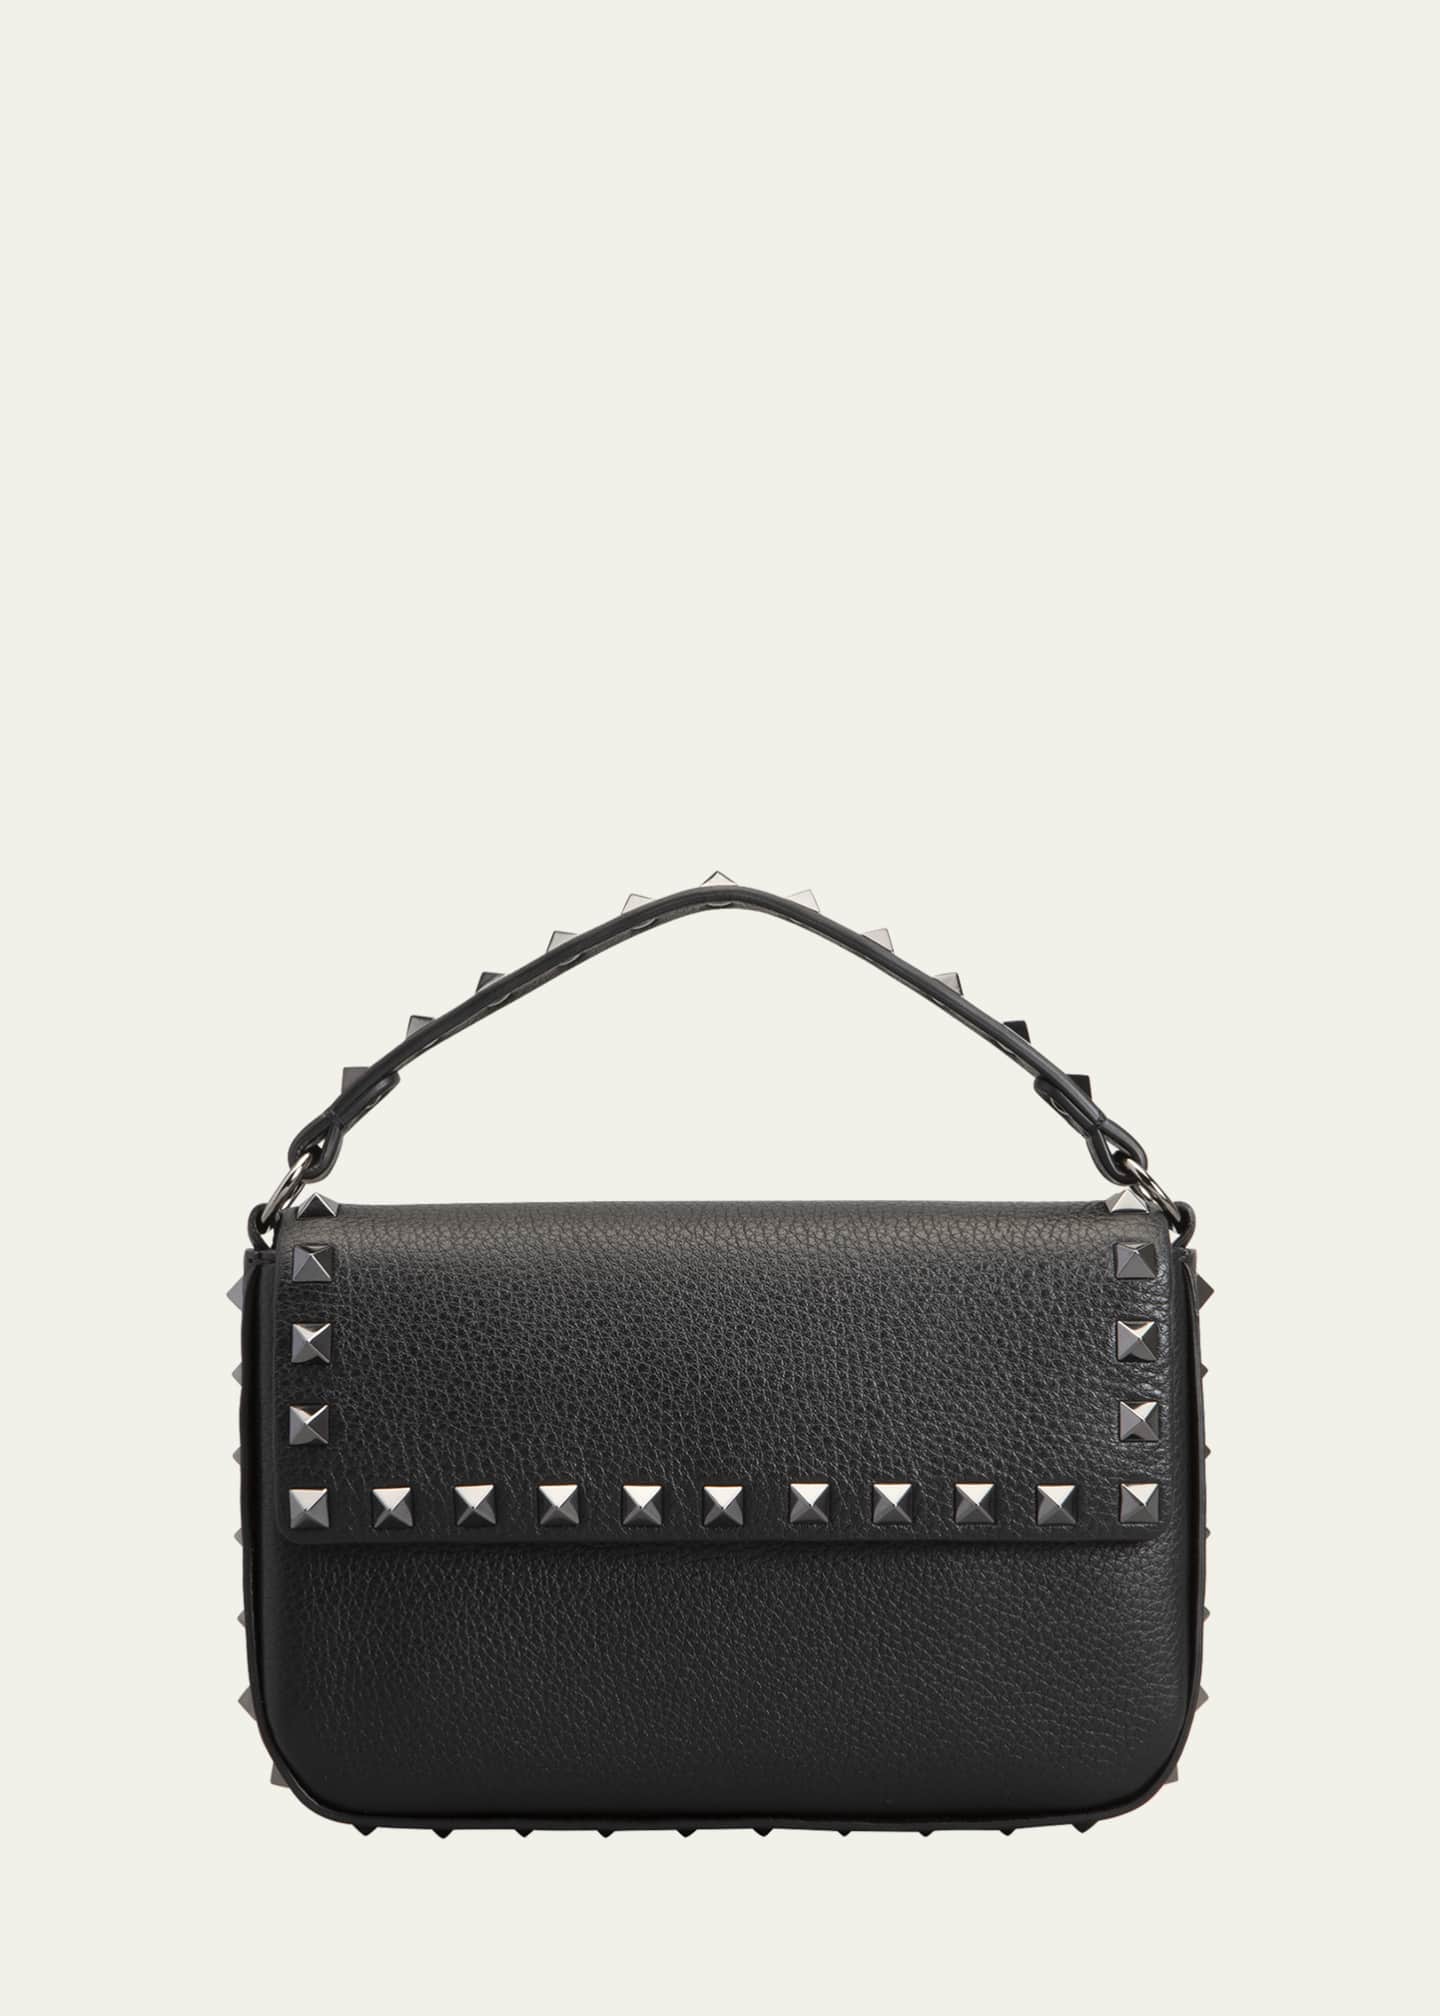 Valentino Rockstud Top-Handle Bag